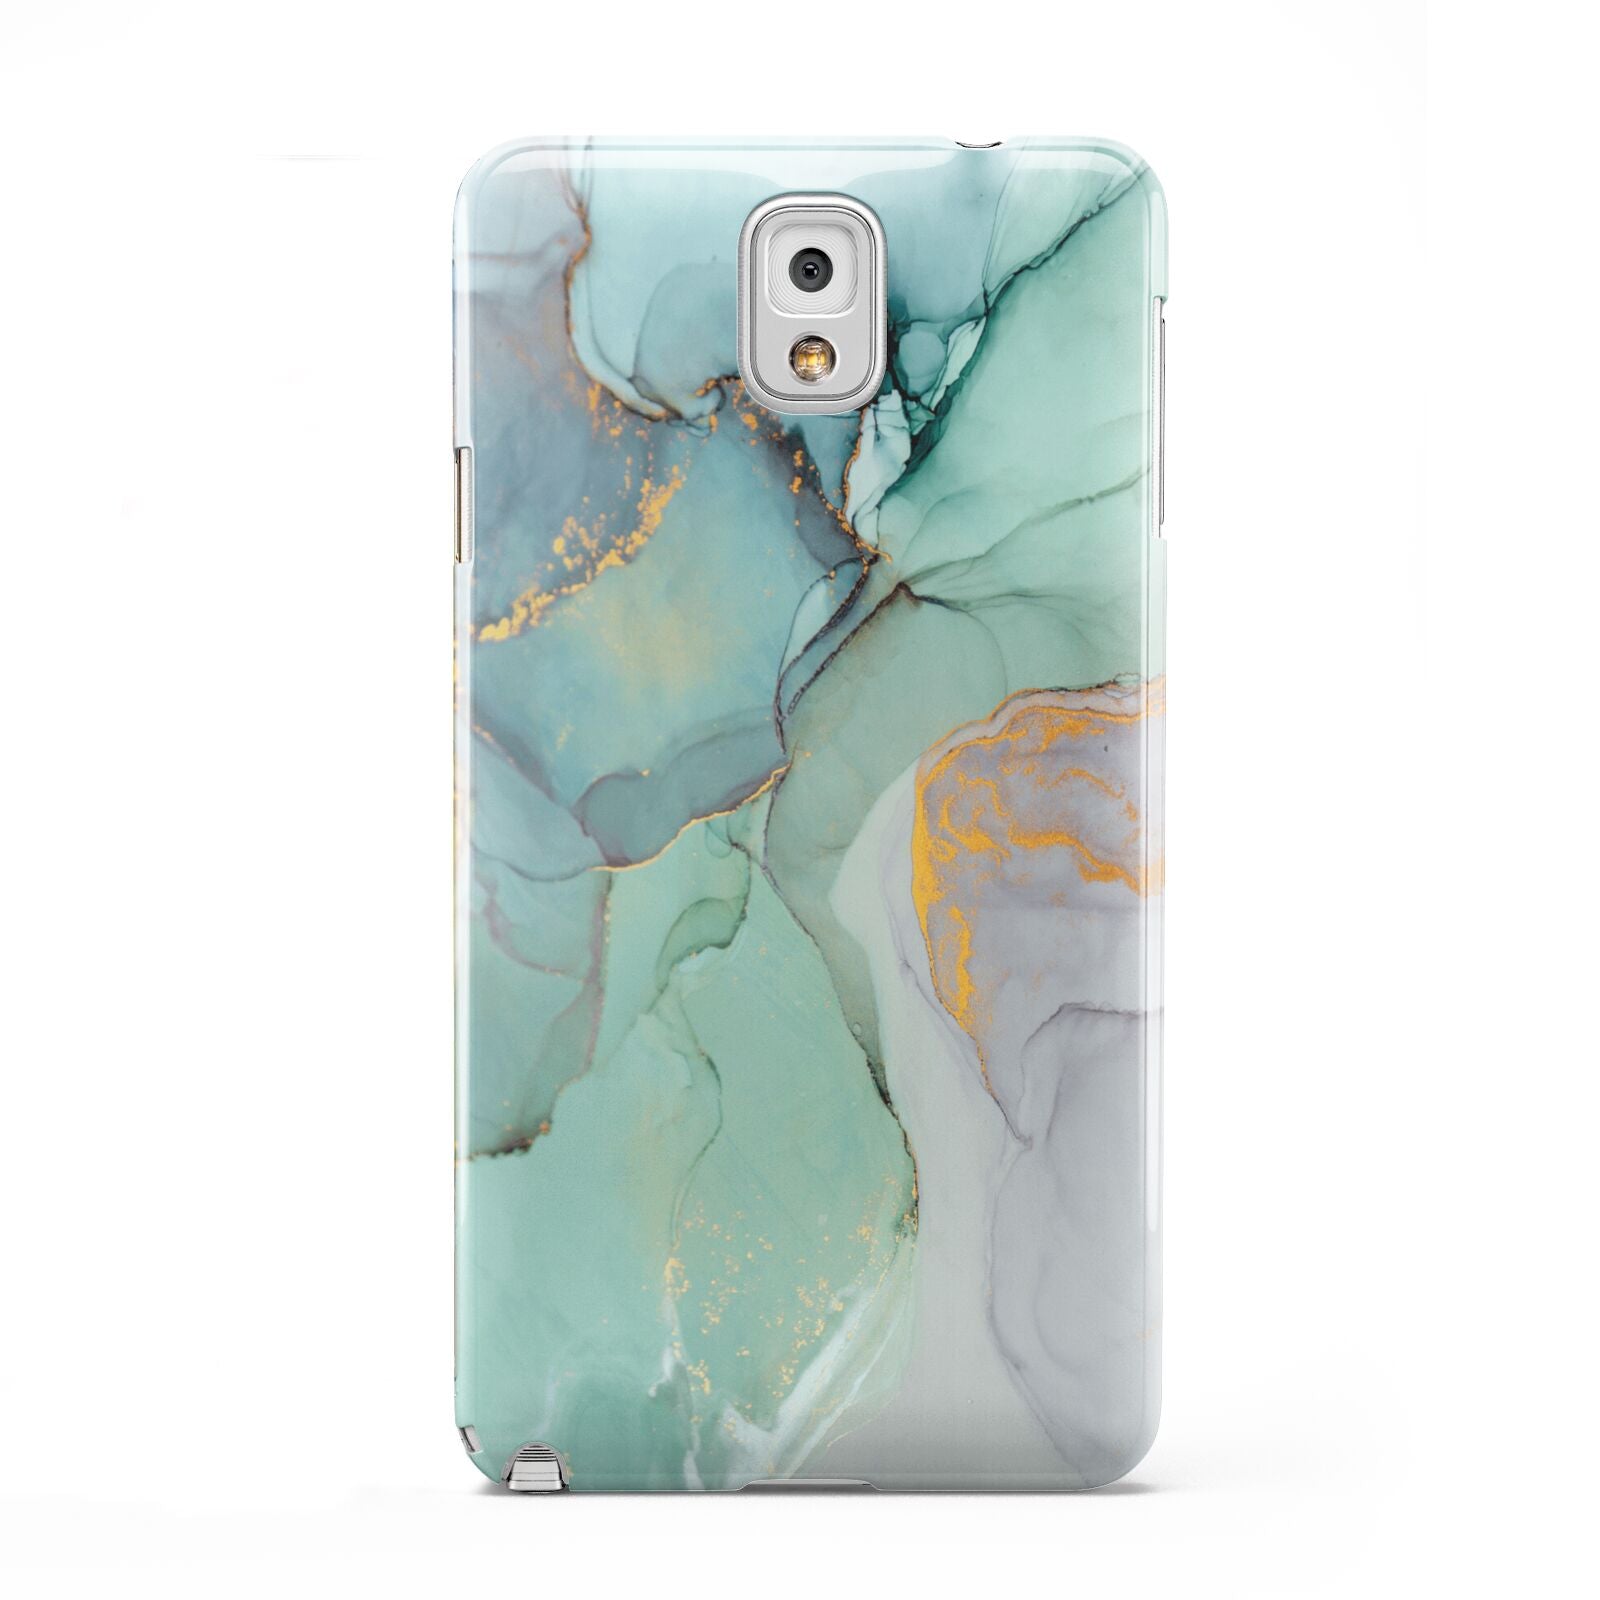 Marble Pattern Samsung Galaxy Note 3 Case